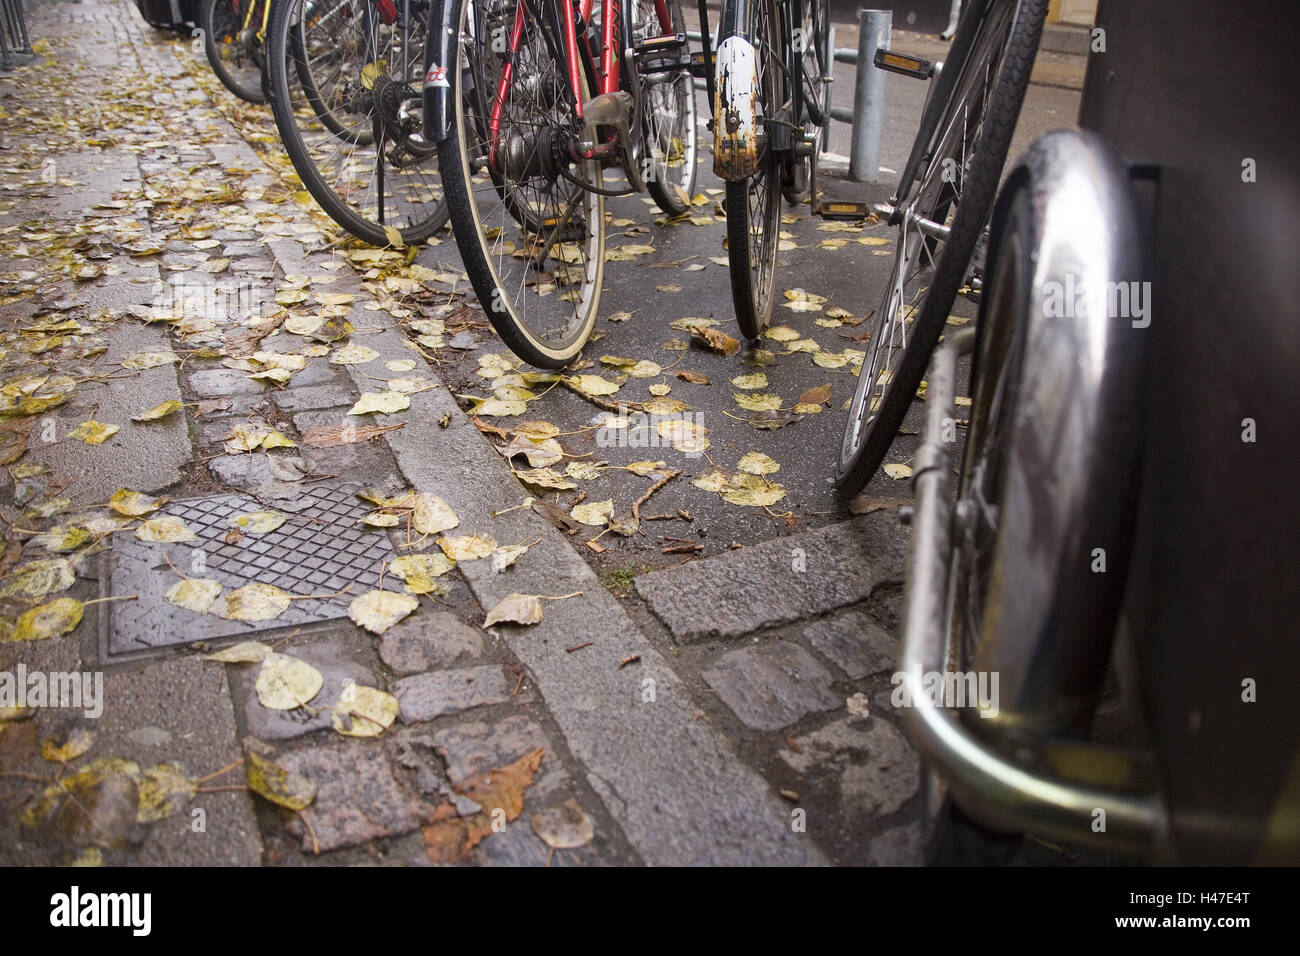 Roadside, bicycle stand, wheels, detail, autumn, street, parking bay, bicycles, stand, put down, sidewalk, foliage, autumn foliage, nobody, Stock Photo